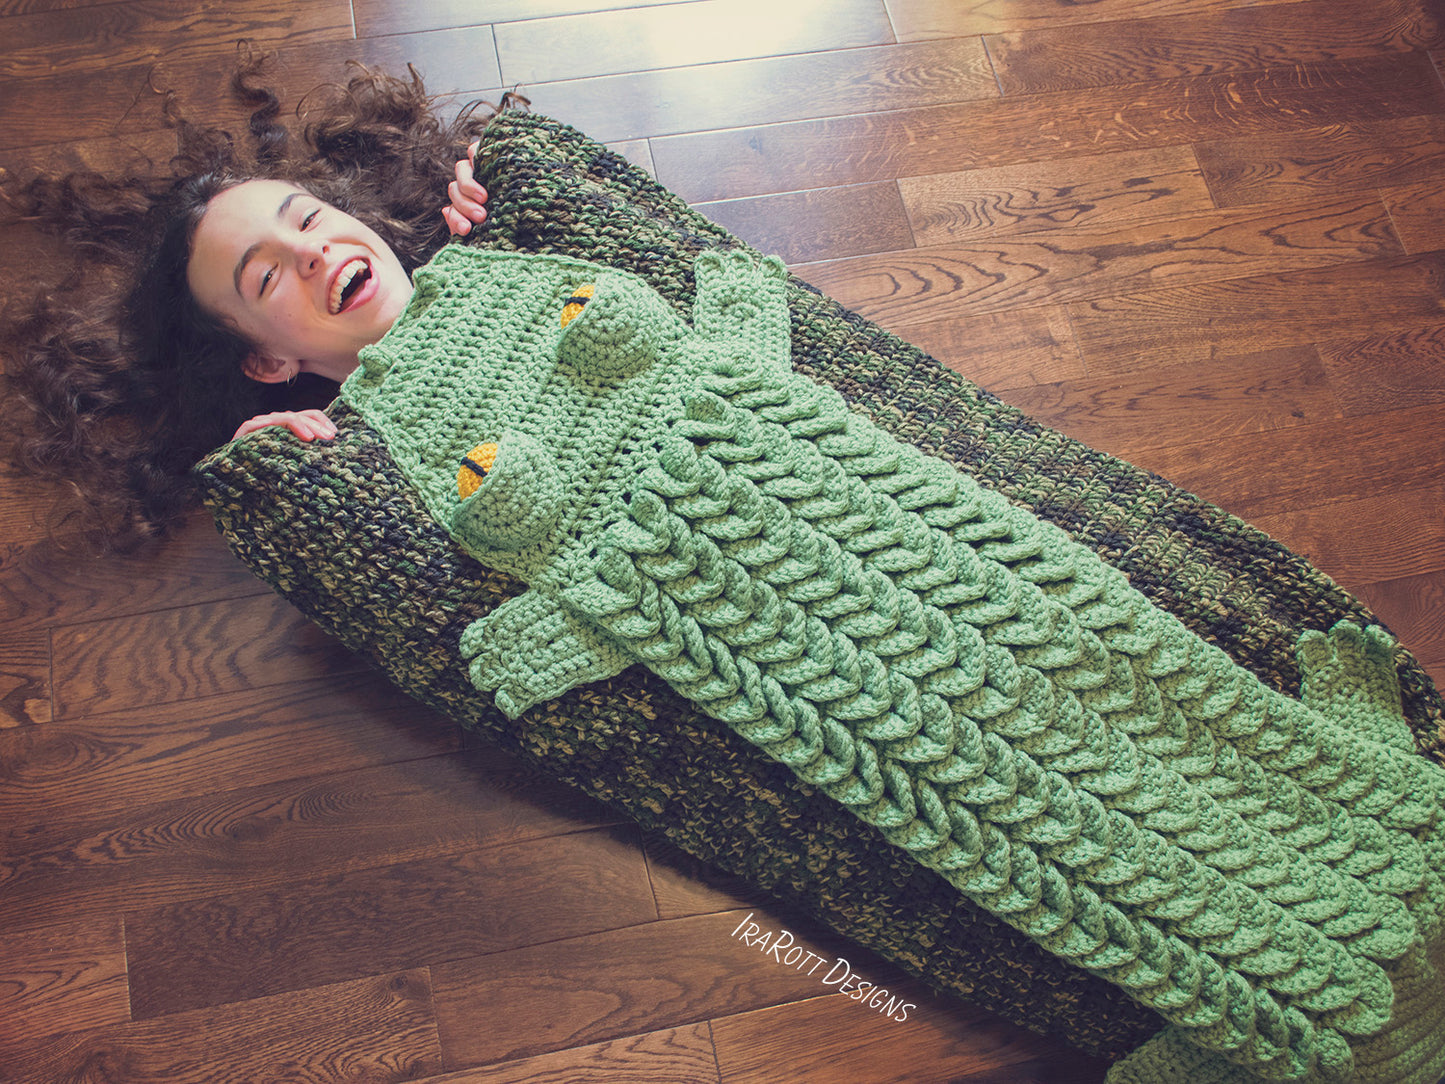 Snappy Simon The Crocodile Sleeping Bag Crochet Pattern